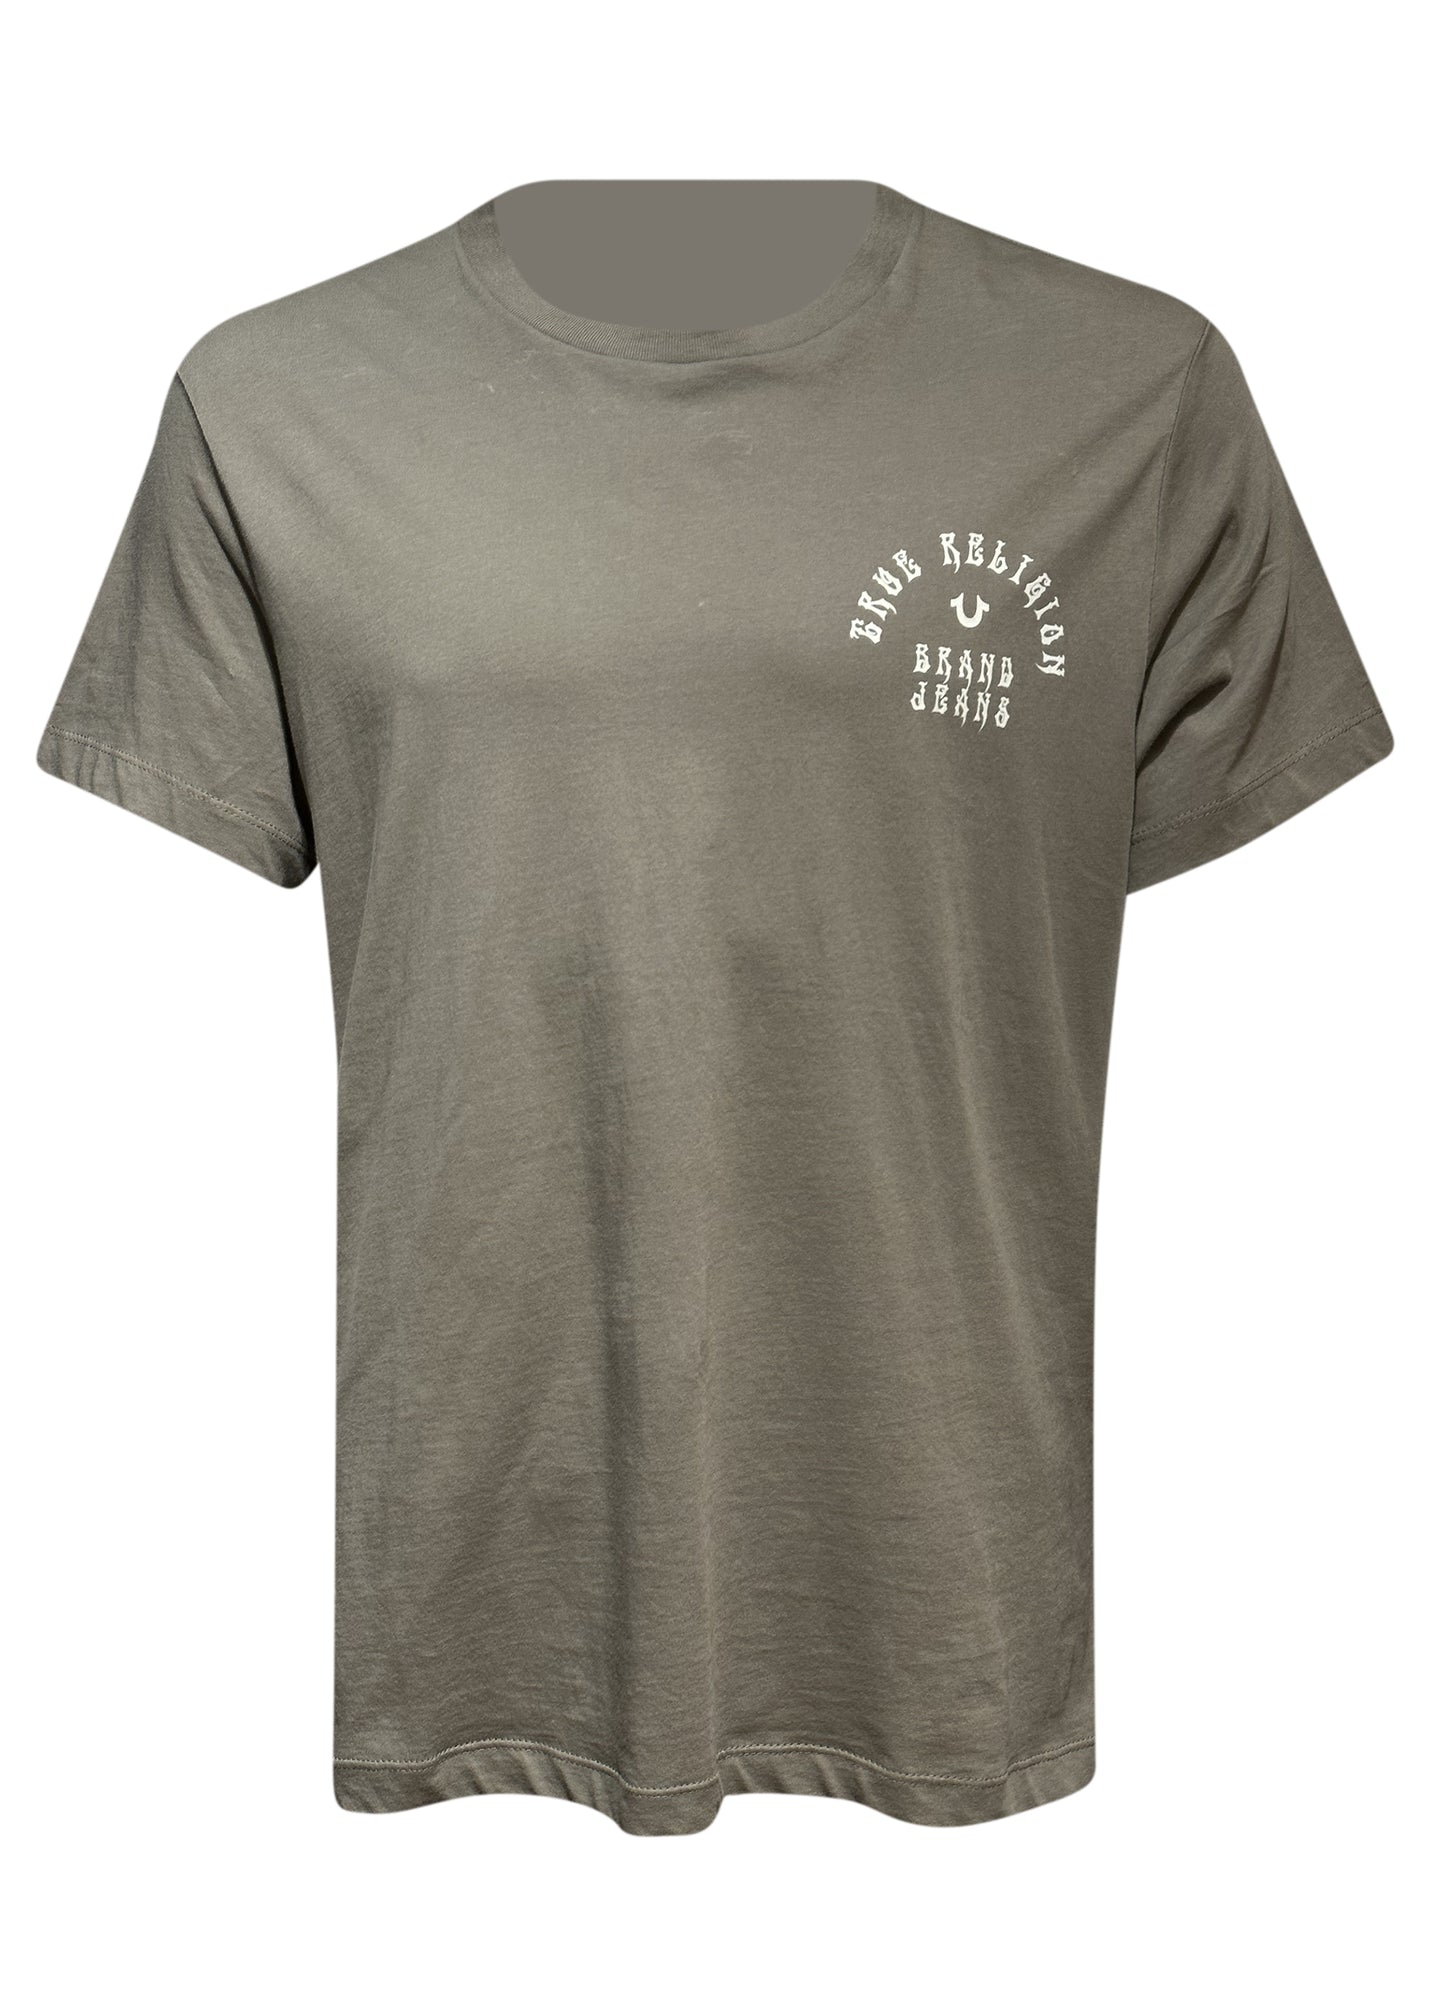 True Religion - Crewneck Big Back Logo T-Shirt - 300511 - Khaki